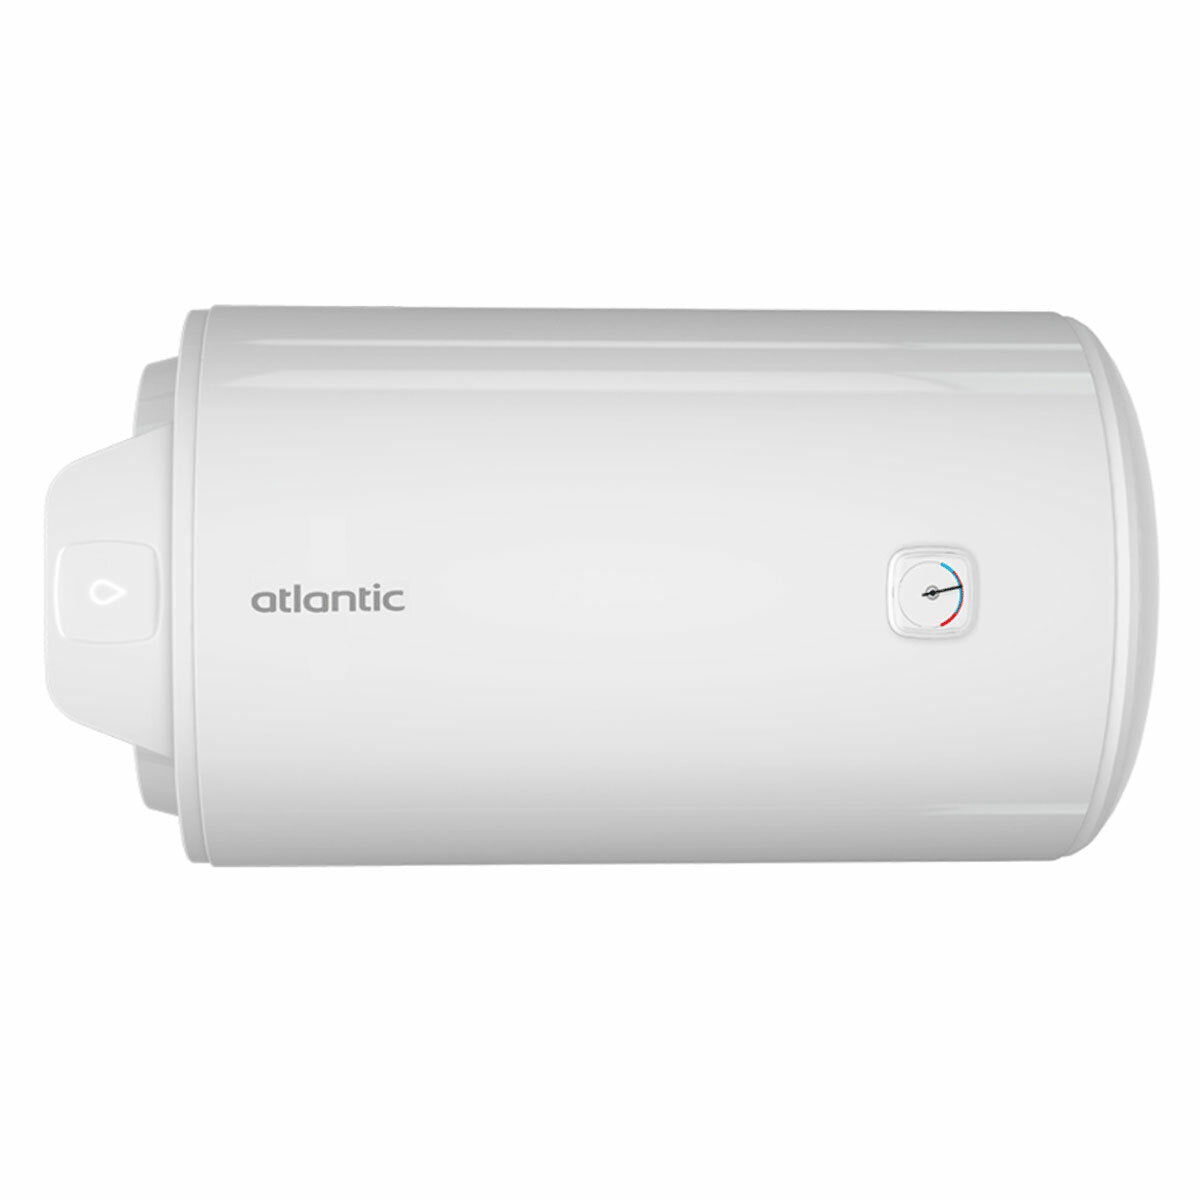 Atlantic EGO 100 horizontal electric water heater 100 liters 2 year warranty